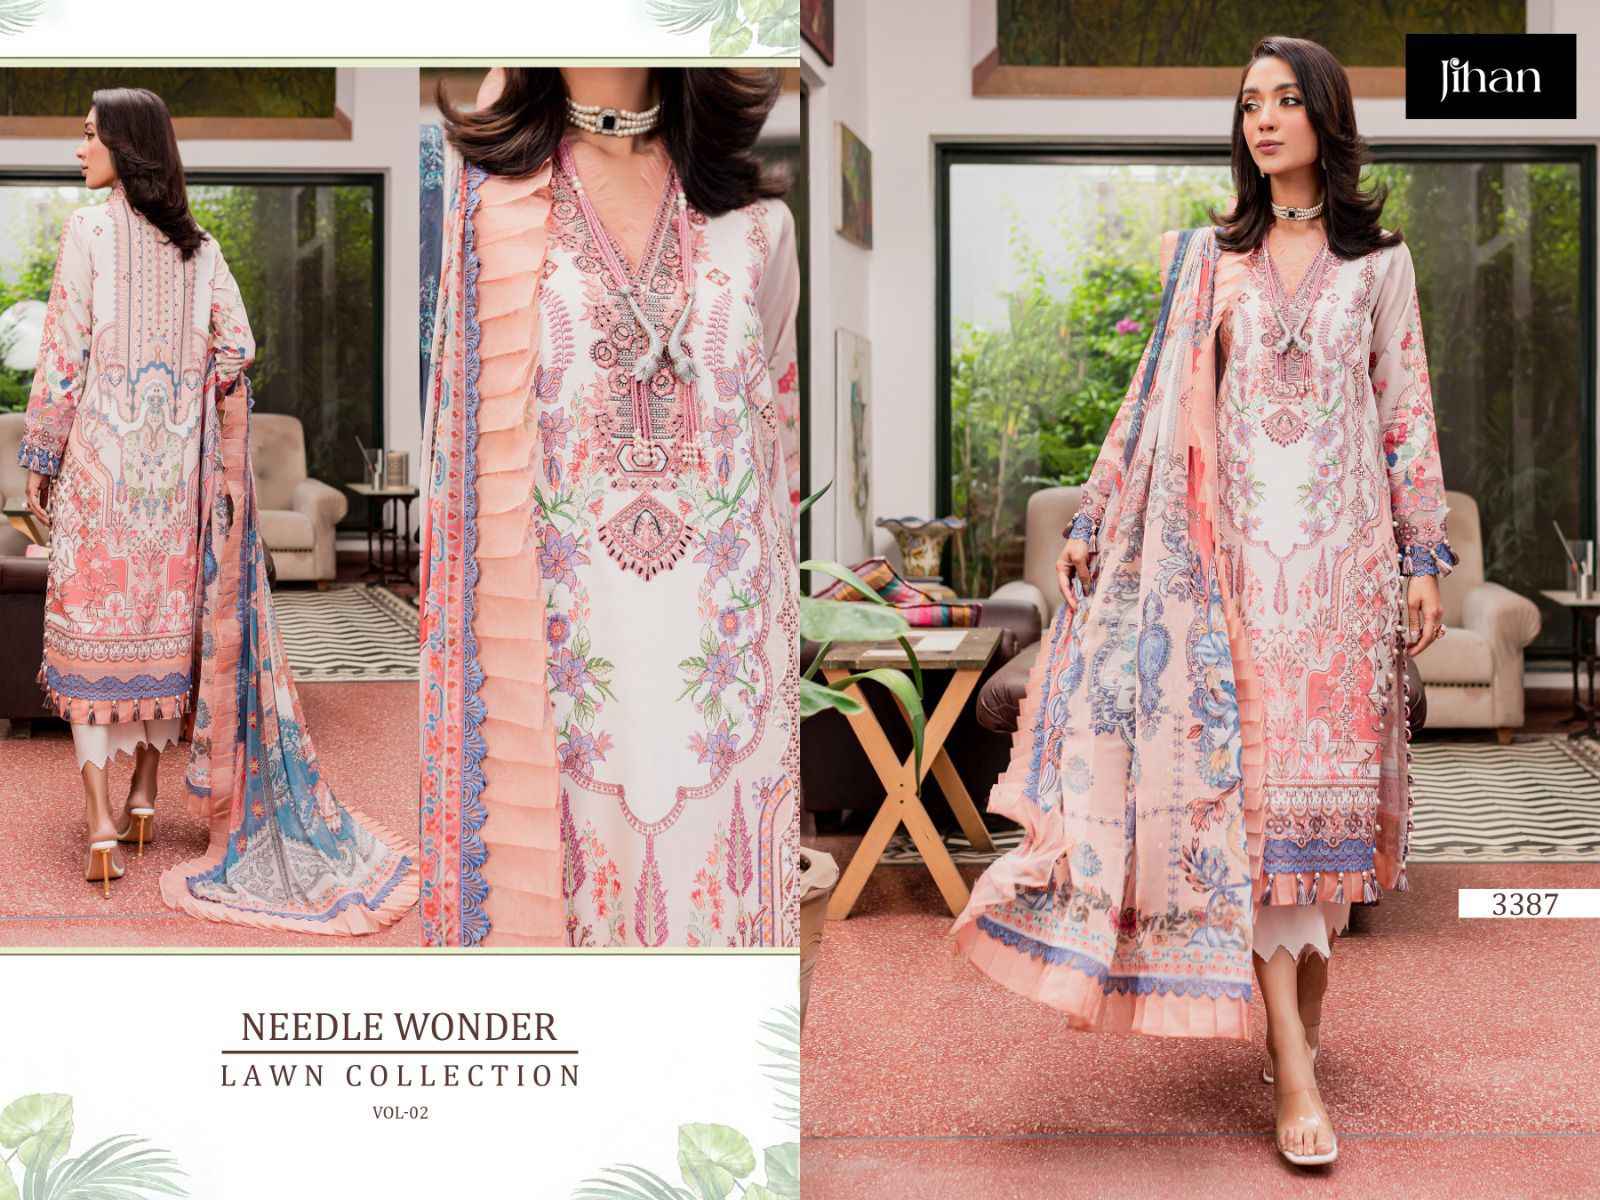 Jihan Needle Wonder Lawn Collection Vol-2 Dress Material (4 pc Cataloge)